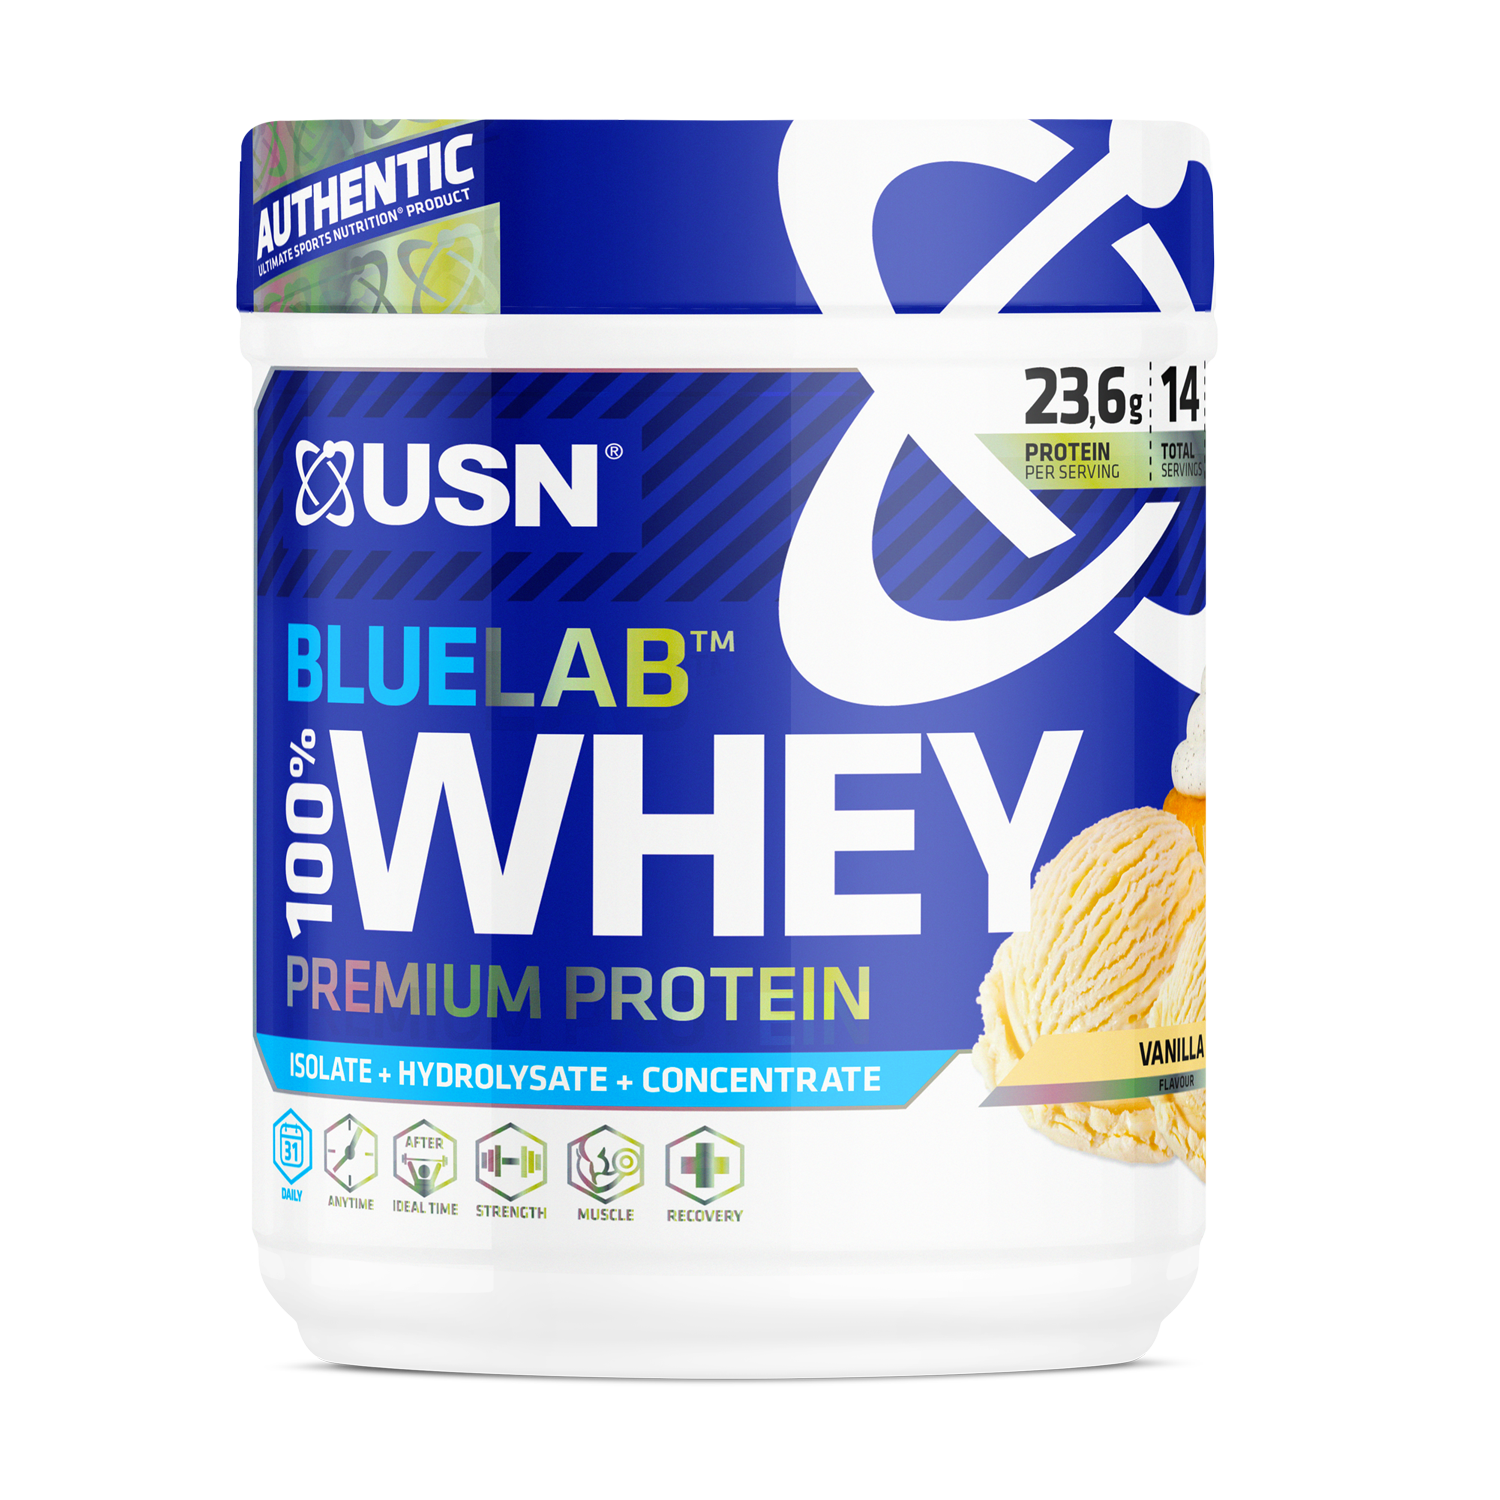 Usn протеин купить. USN 100% Premium Whey Protein. USN Blue Lab 100% Whey Premium. USN Bluelab 100 Whey Premium Protein. Протеин USN Whey Bluelab.